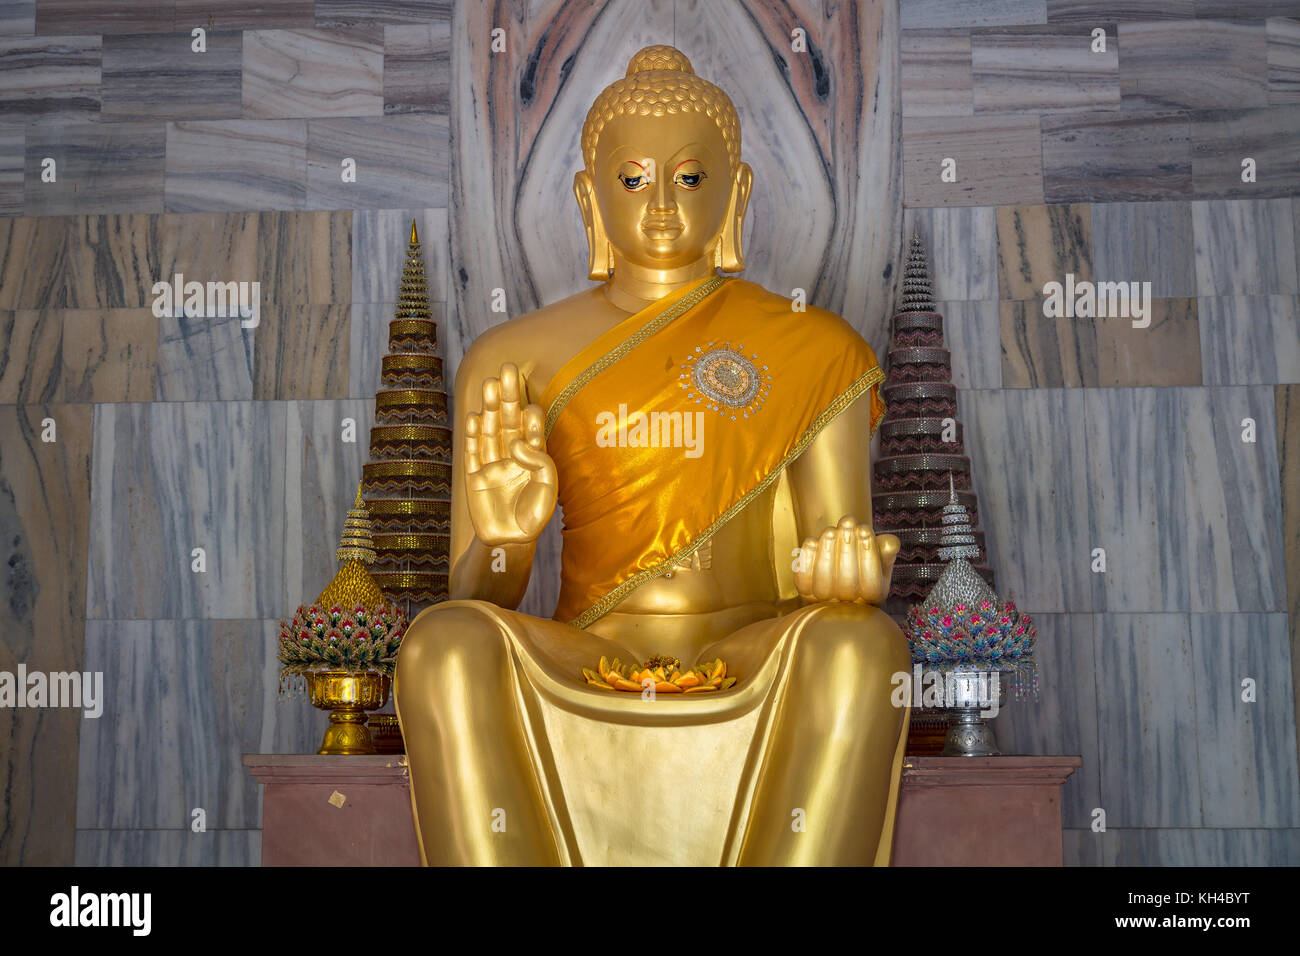 Golden sculpture of sitting Buddha in close up view at Wat Thai temple Sarnath, Varanasi, India. Stock Photo